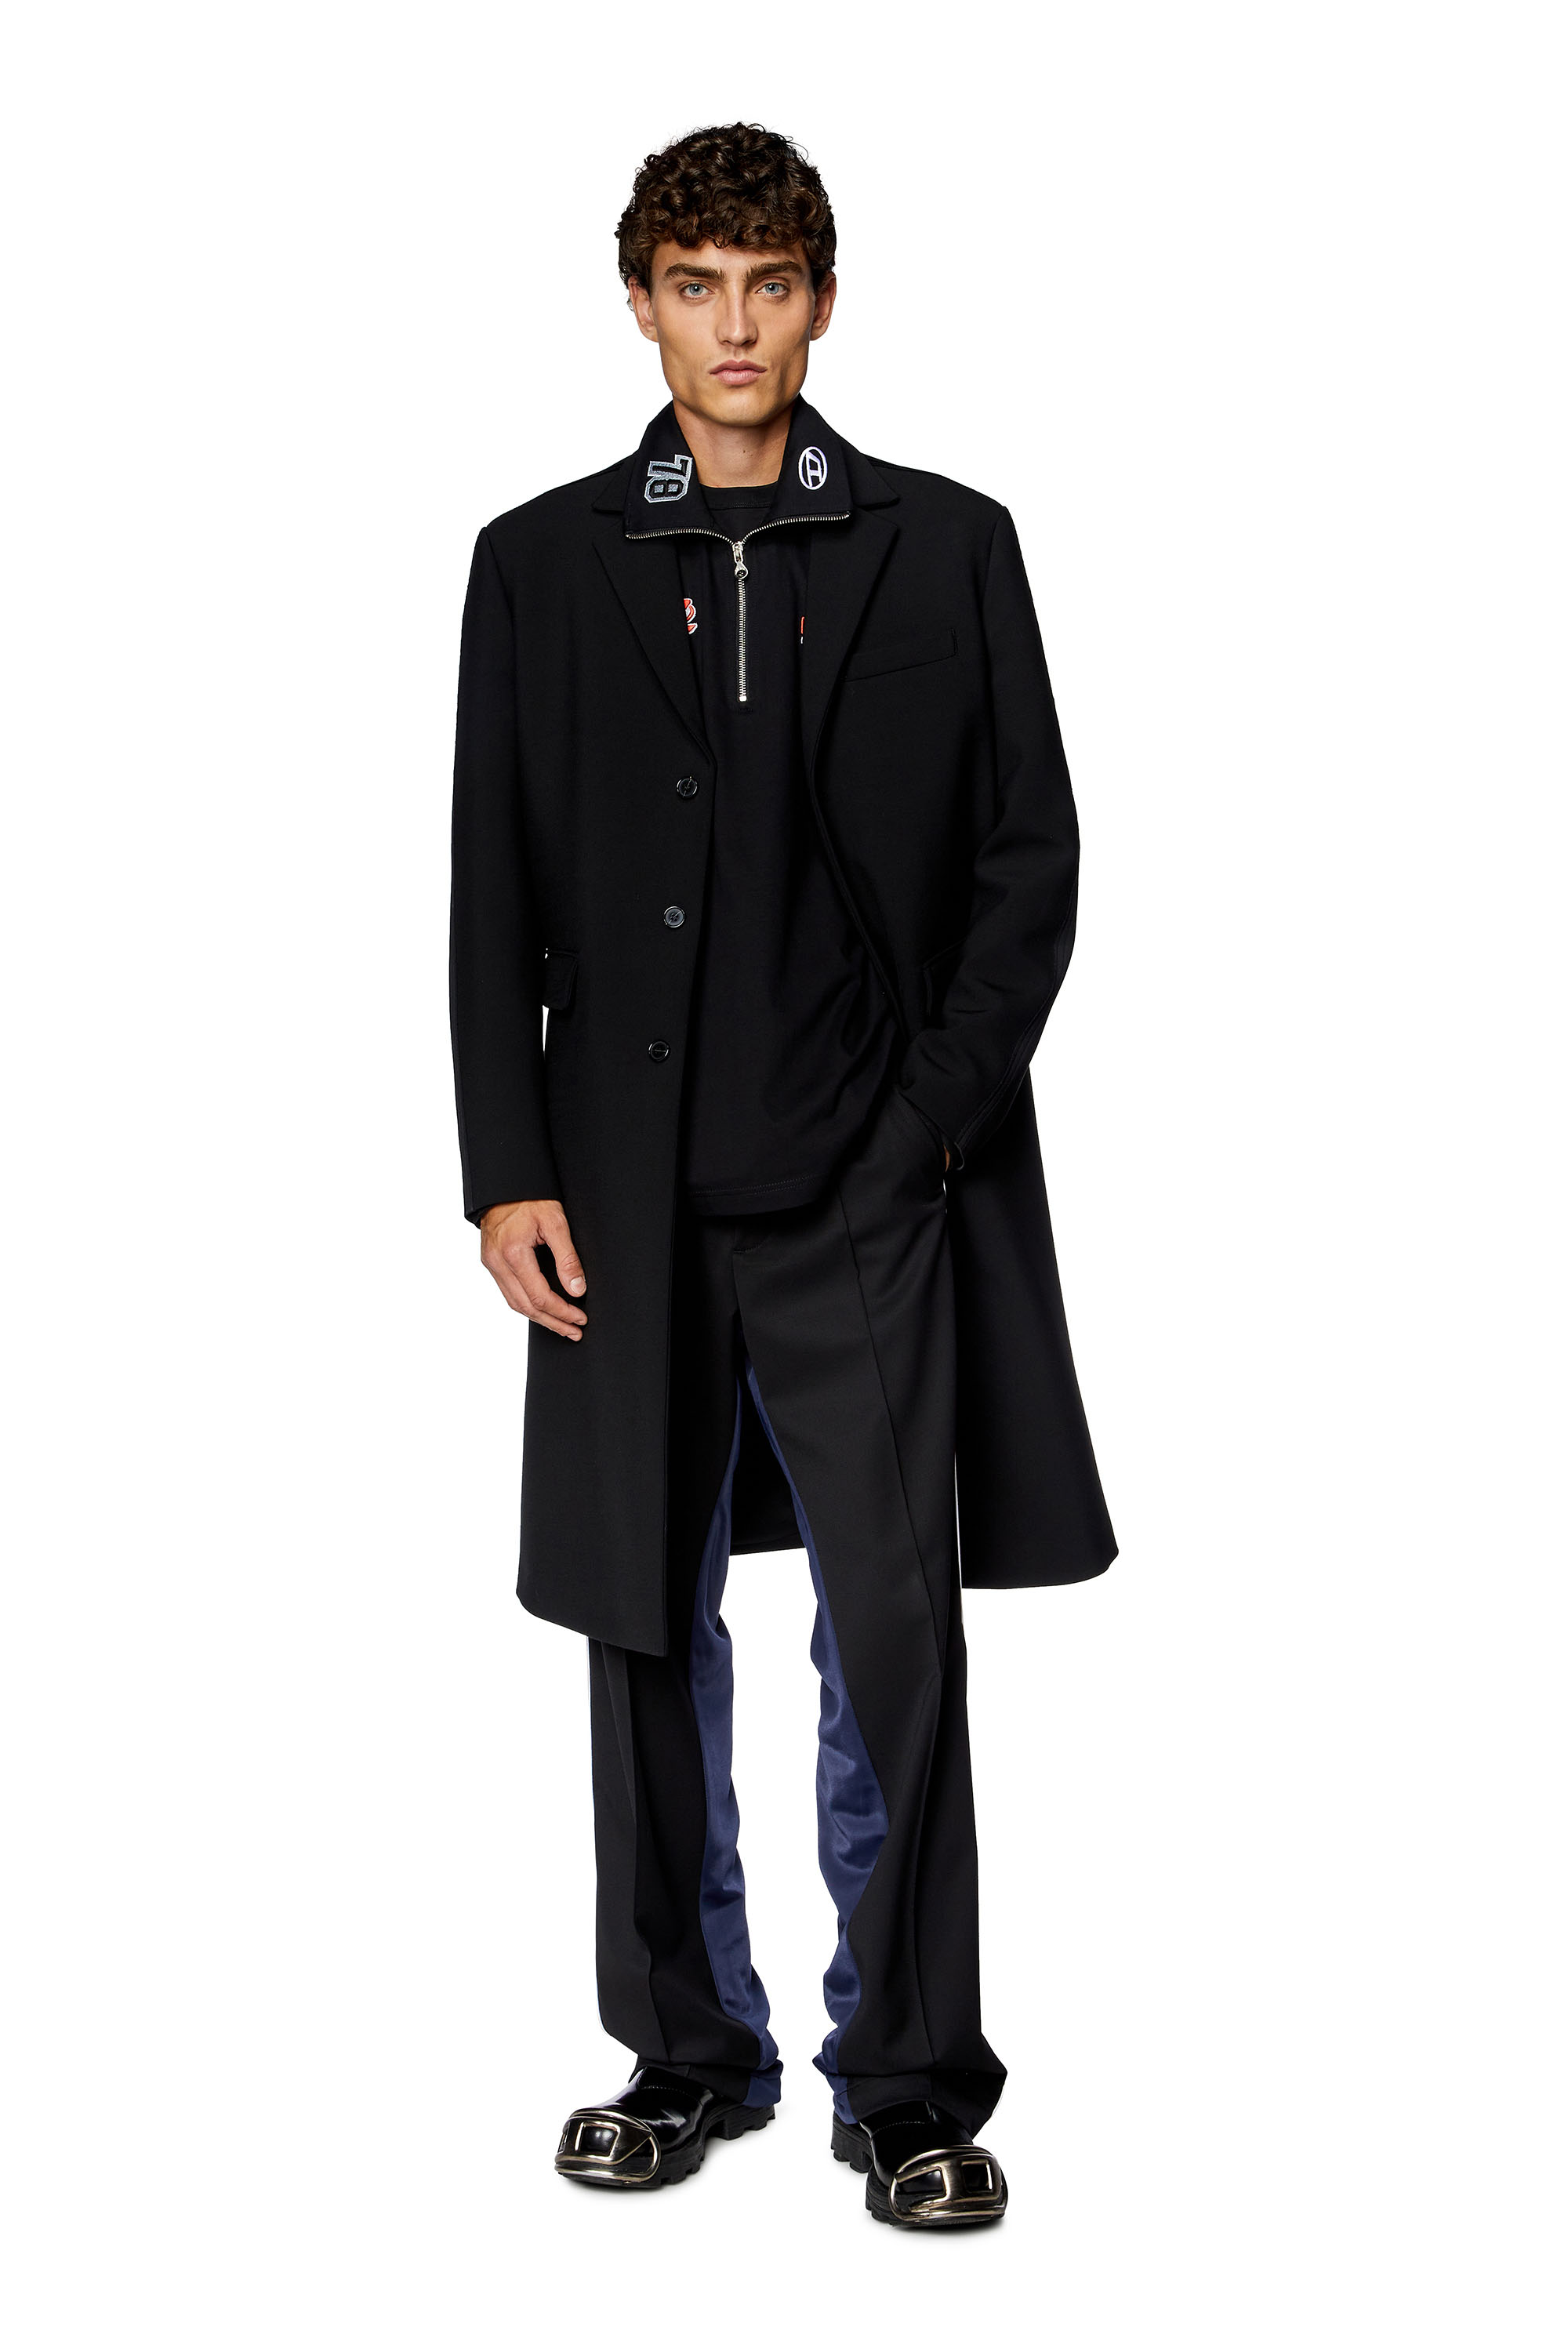 Diesel - J-DELLER, Man Hybrid coat in cool wool and jersey in Black - Image 1